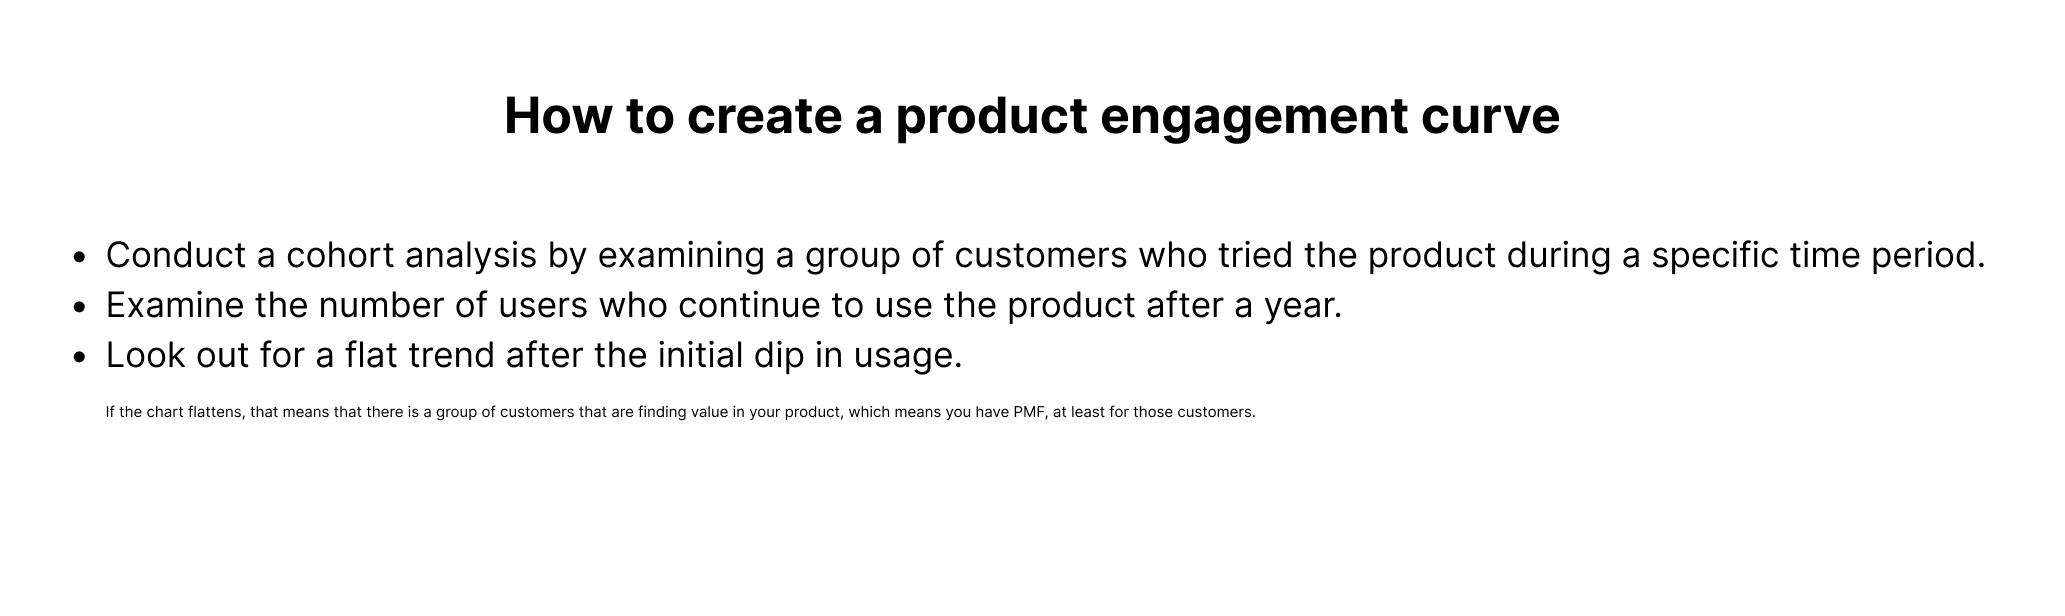 Product Engagement Curve